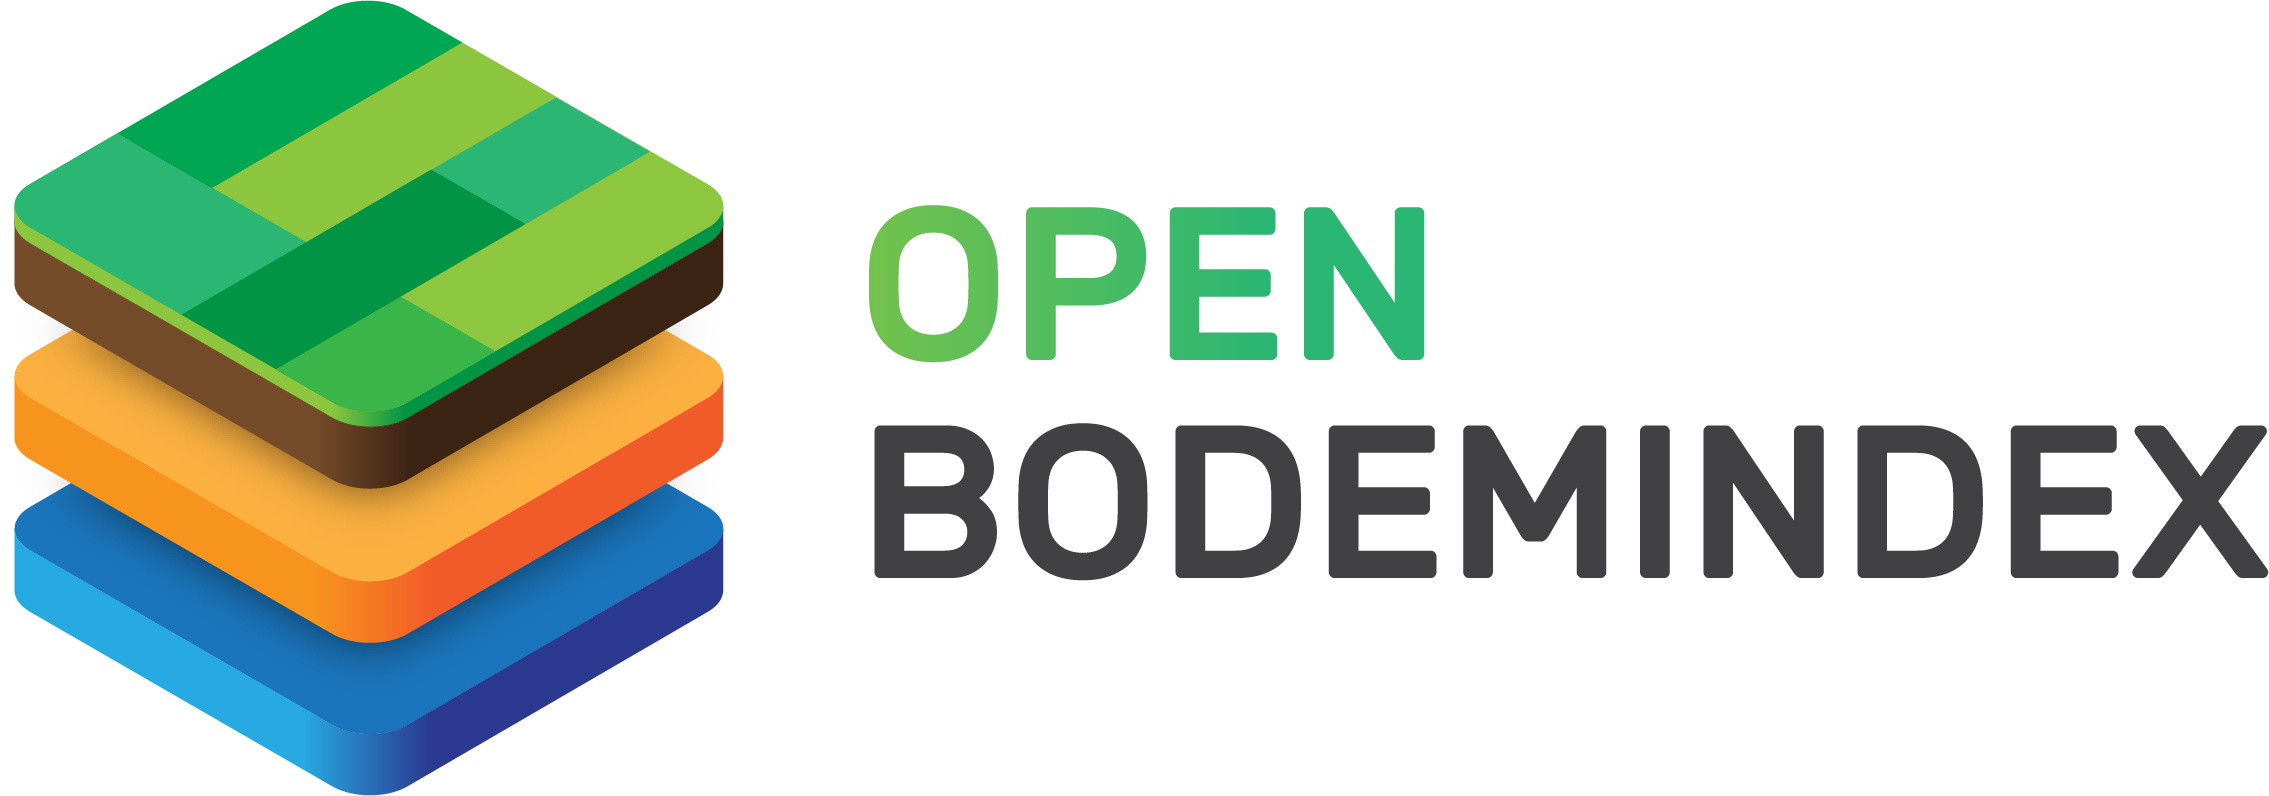 Open BodemIndex